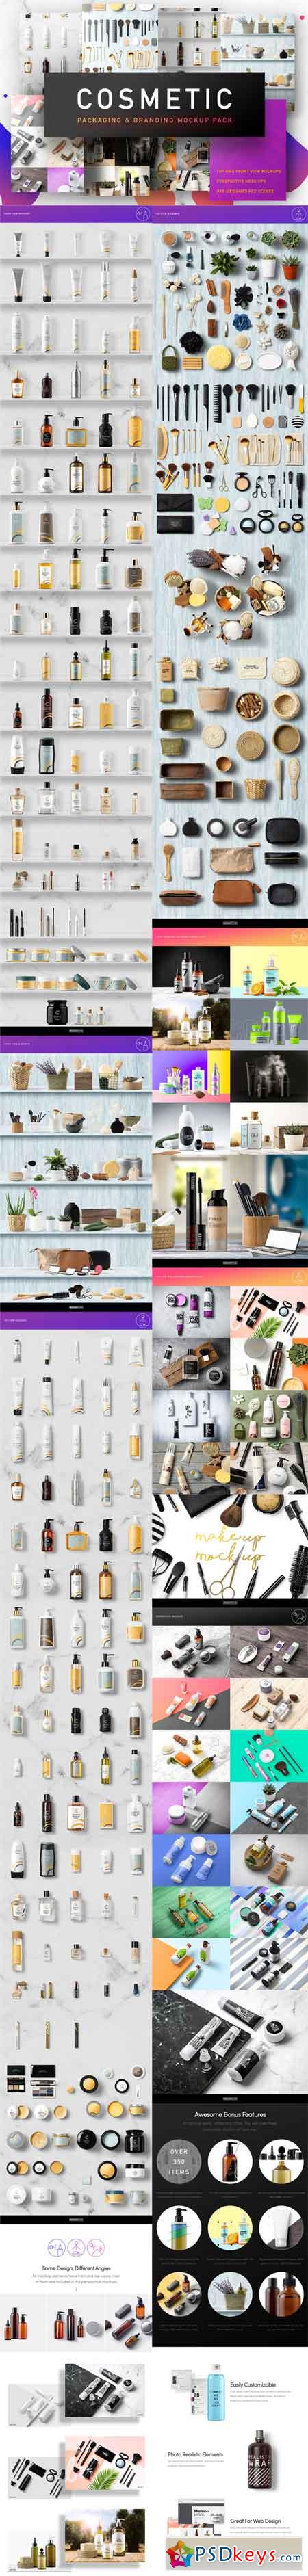 Download Cosmetic Packaging Branding MockUp 701256 » Free Download Photoshop Vector Stock image Via ...